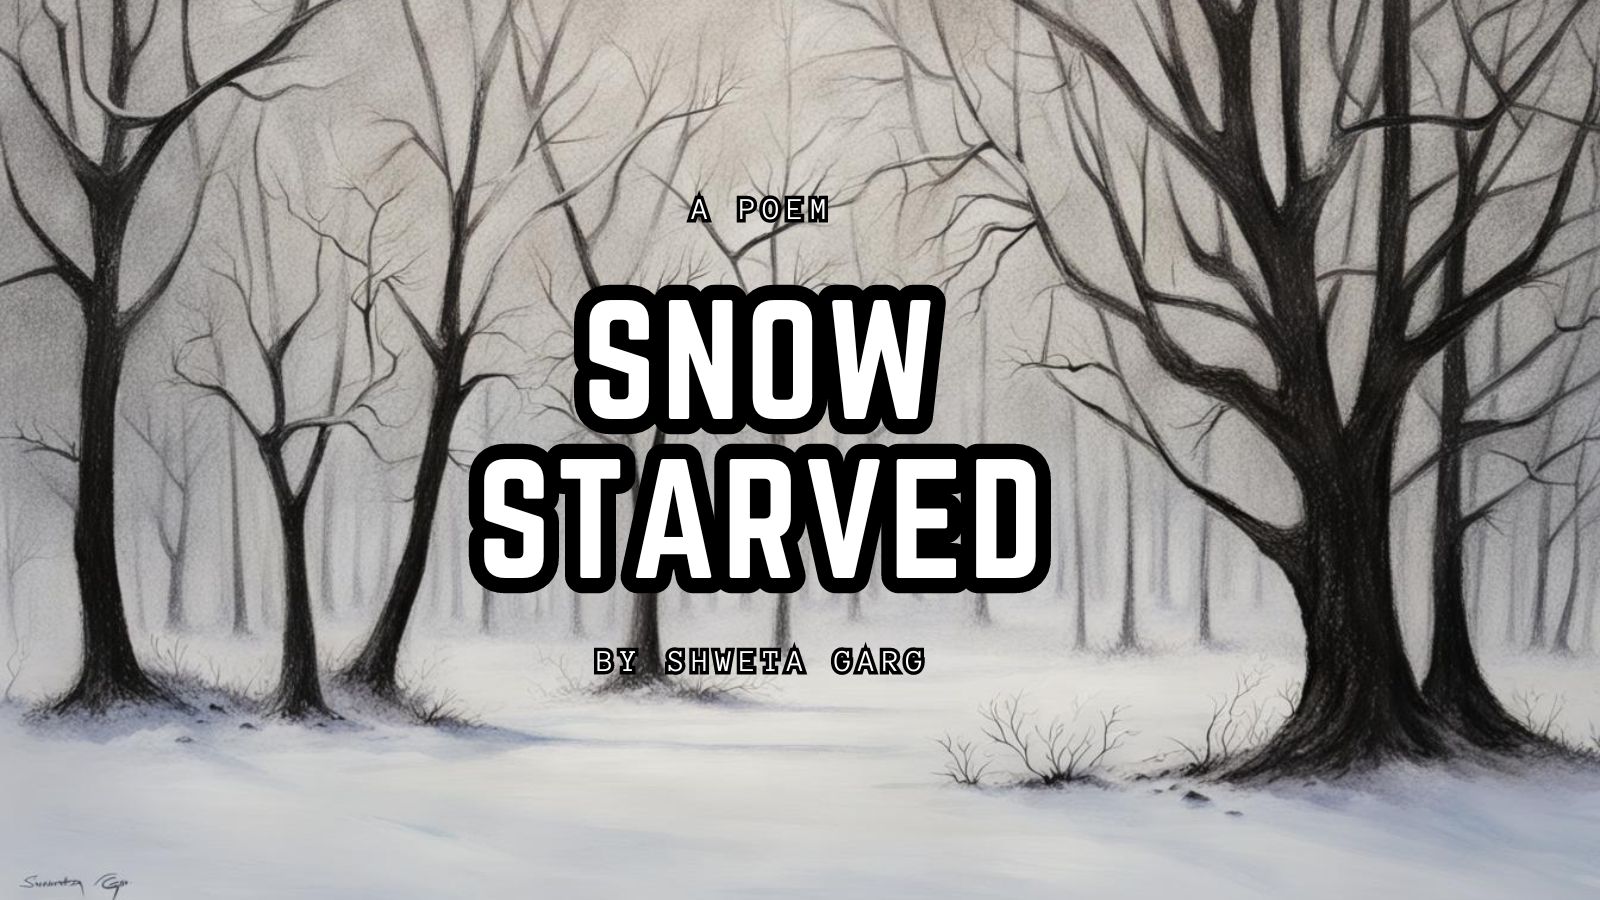 Snow starved by Shweta Garg